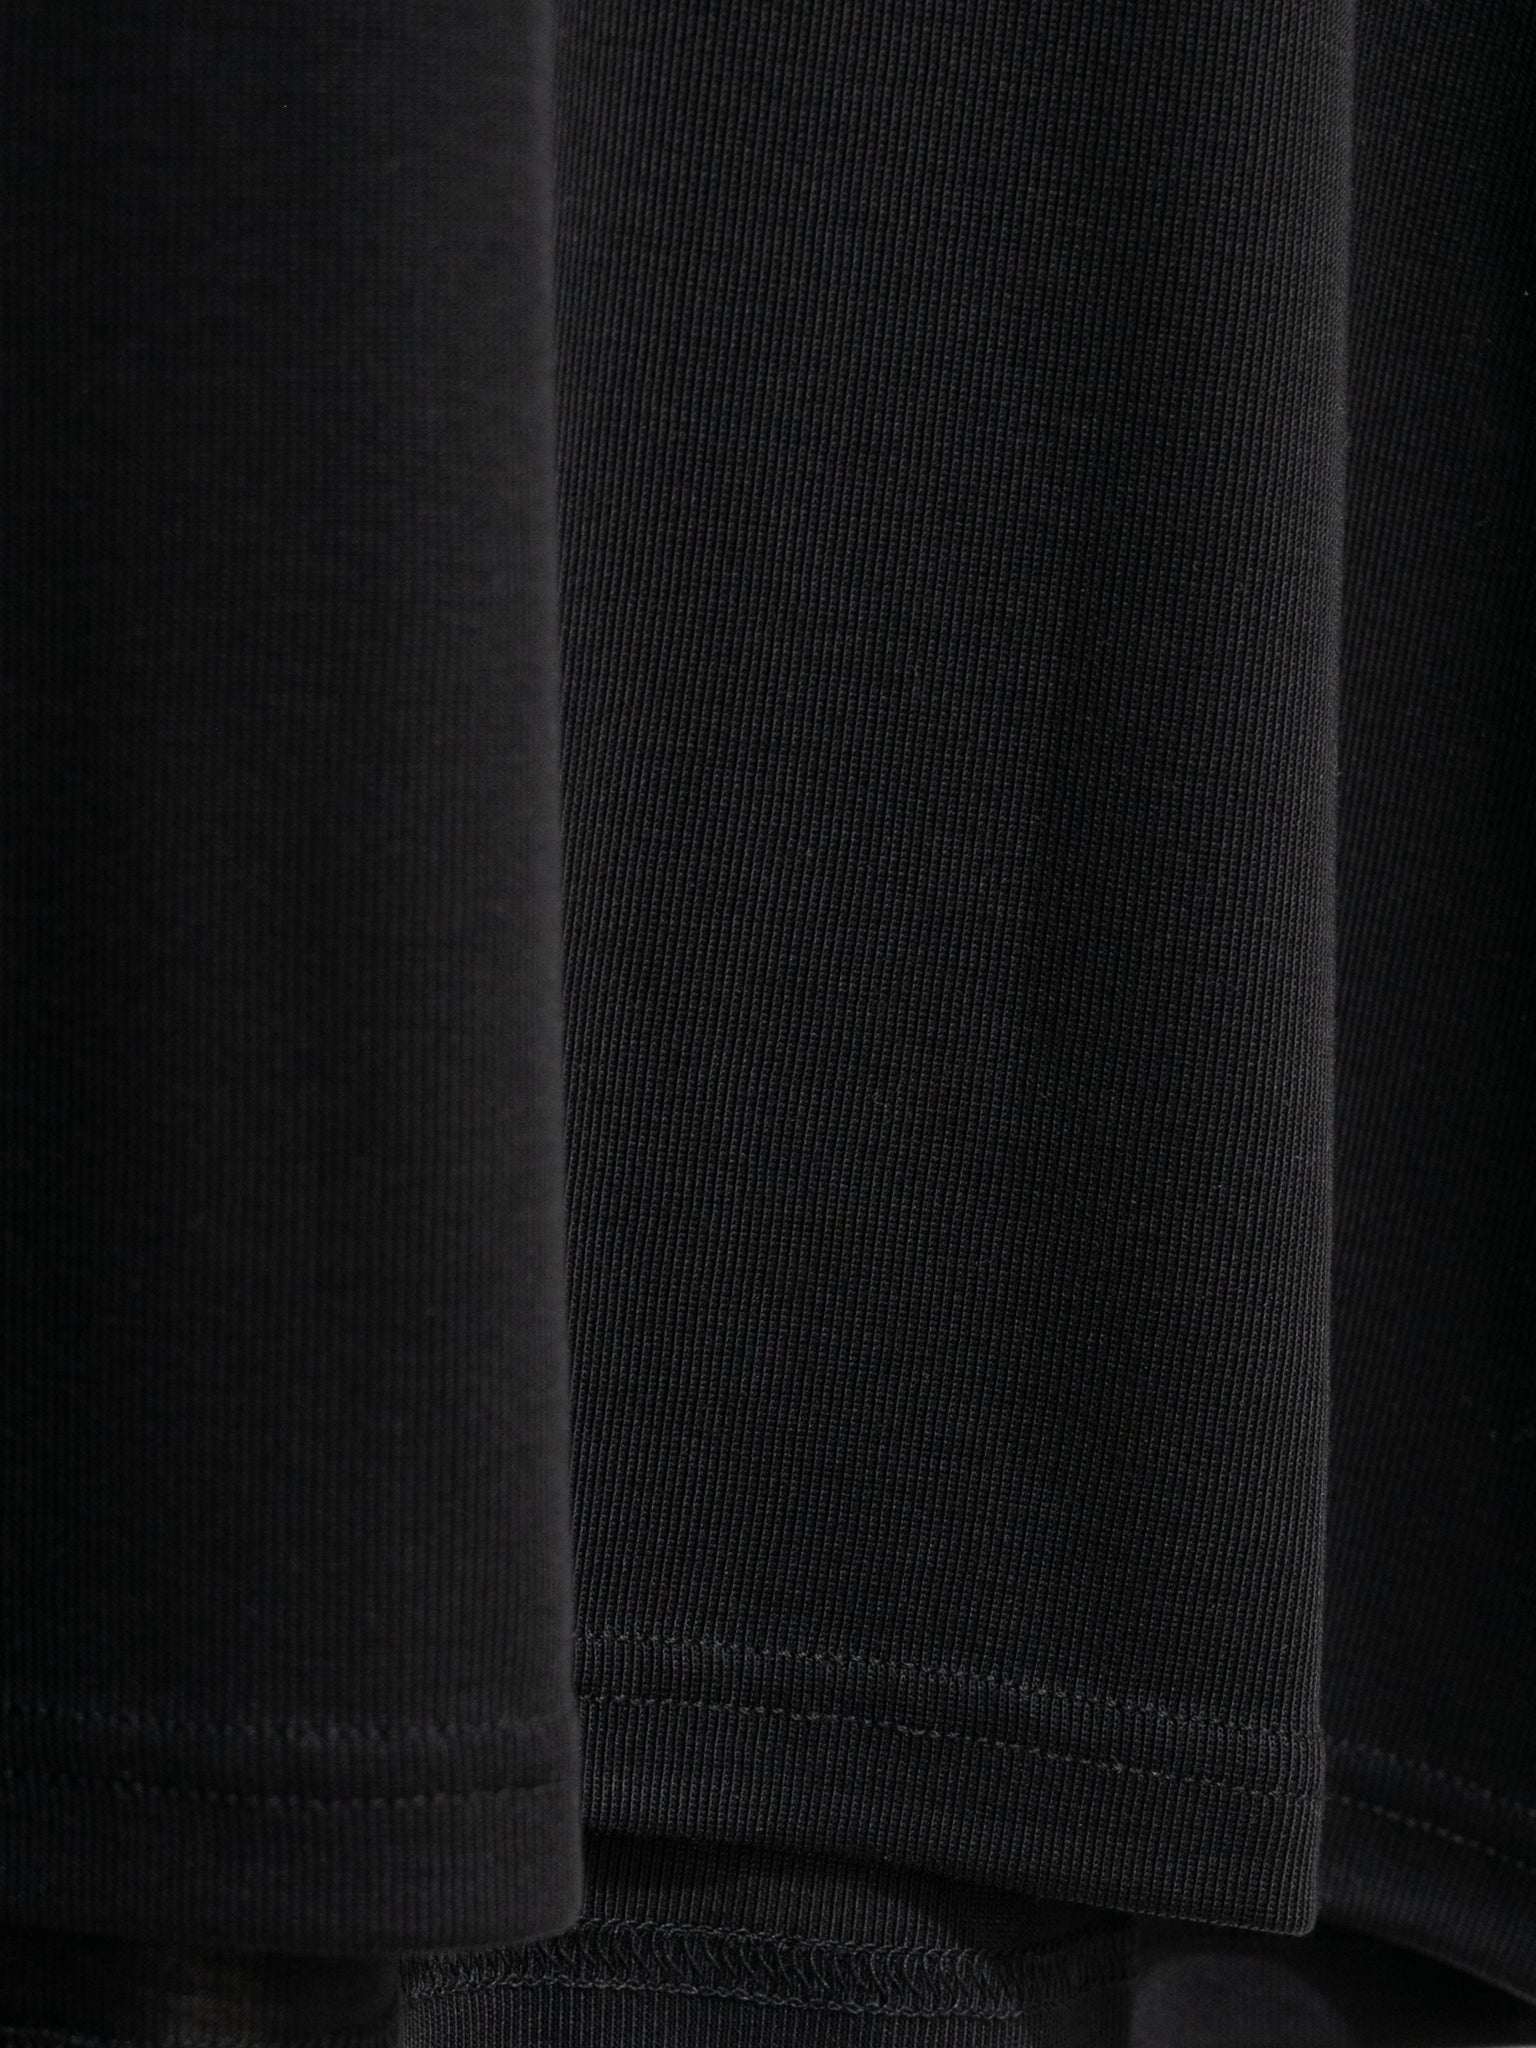 Namu Shop - Studio Nicholson Rond Jersey T-Shirt - Black